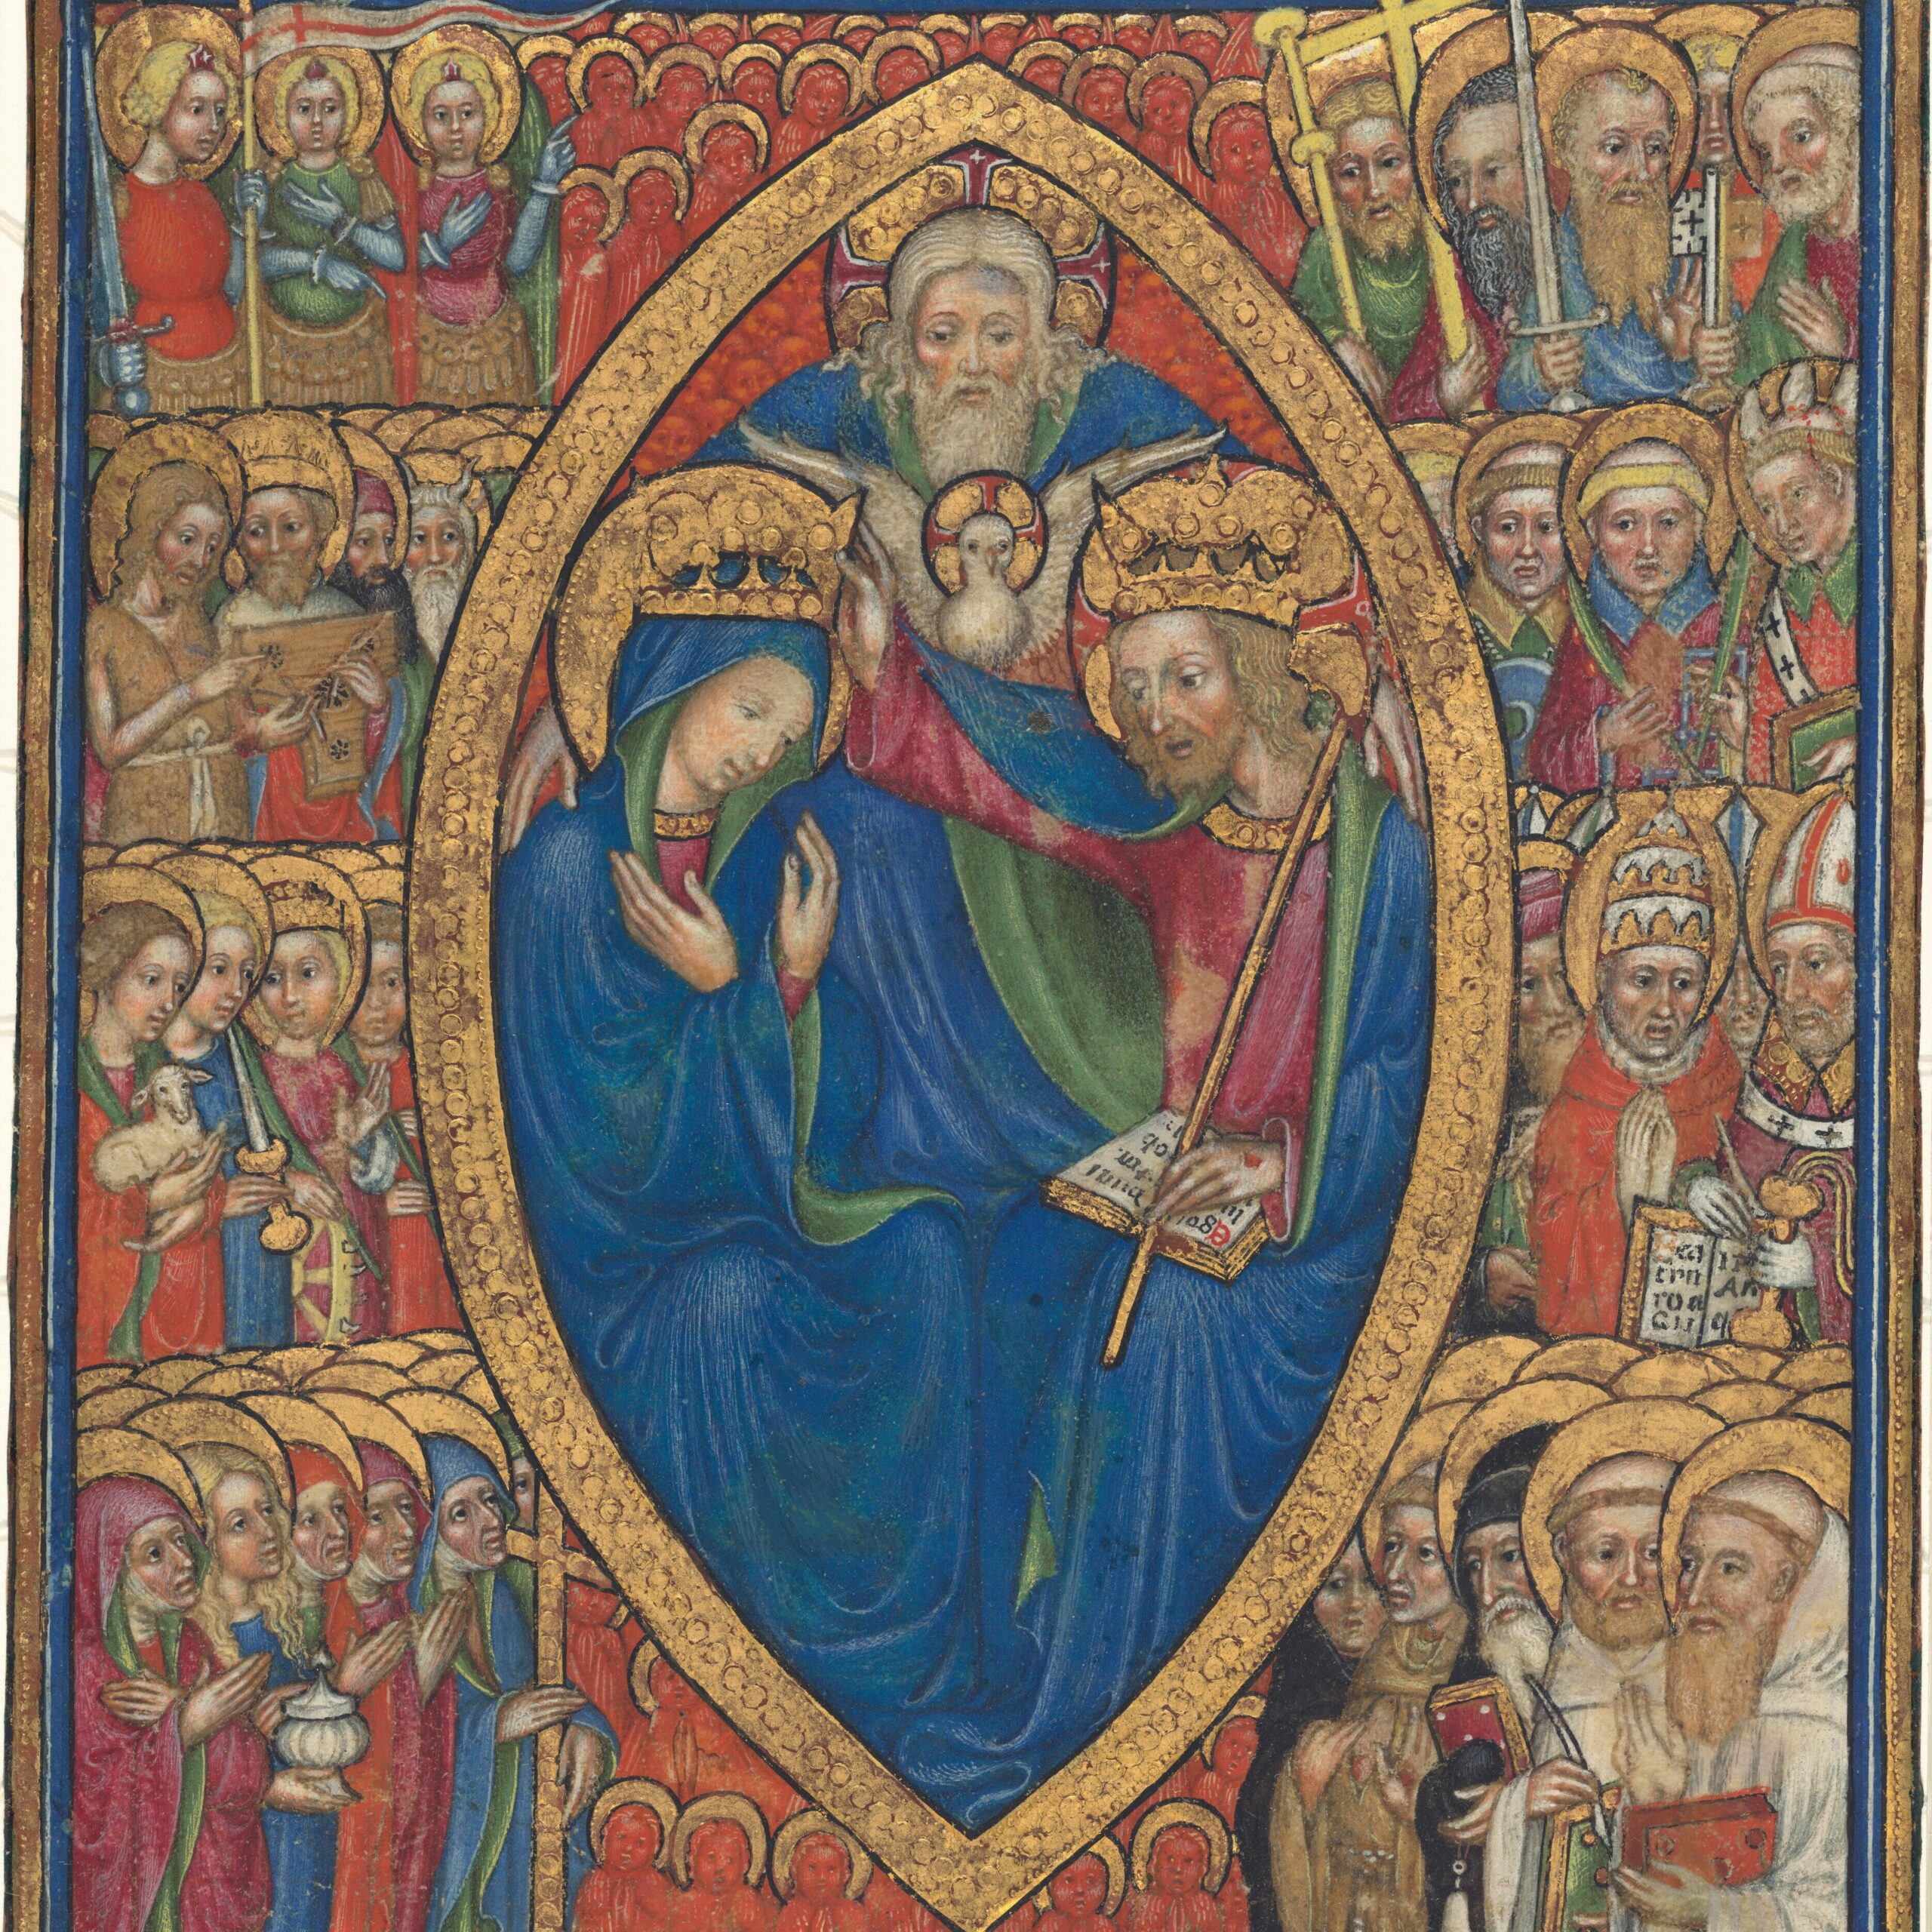 Coronation of the Virgin Mary with Trinity and Saints